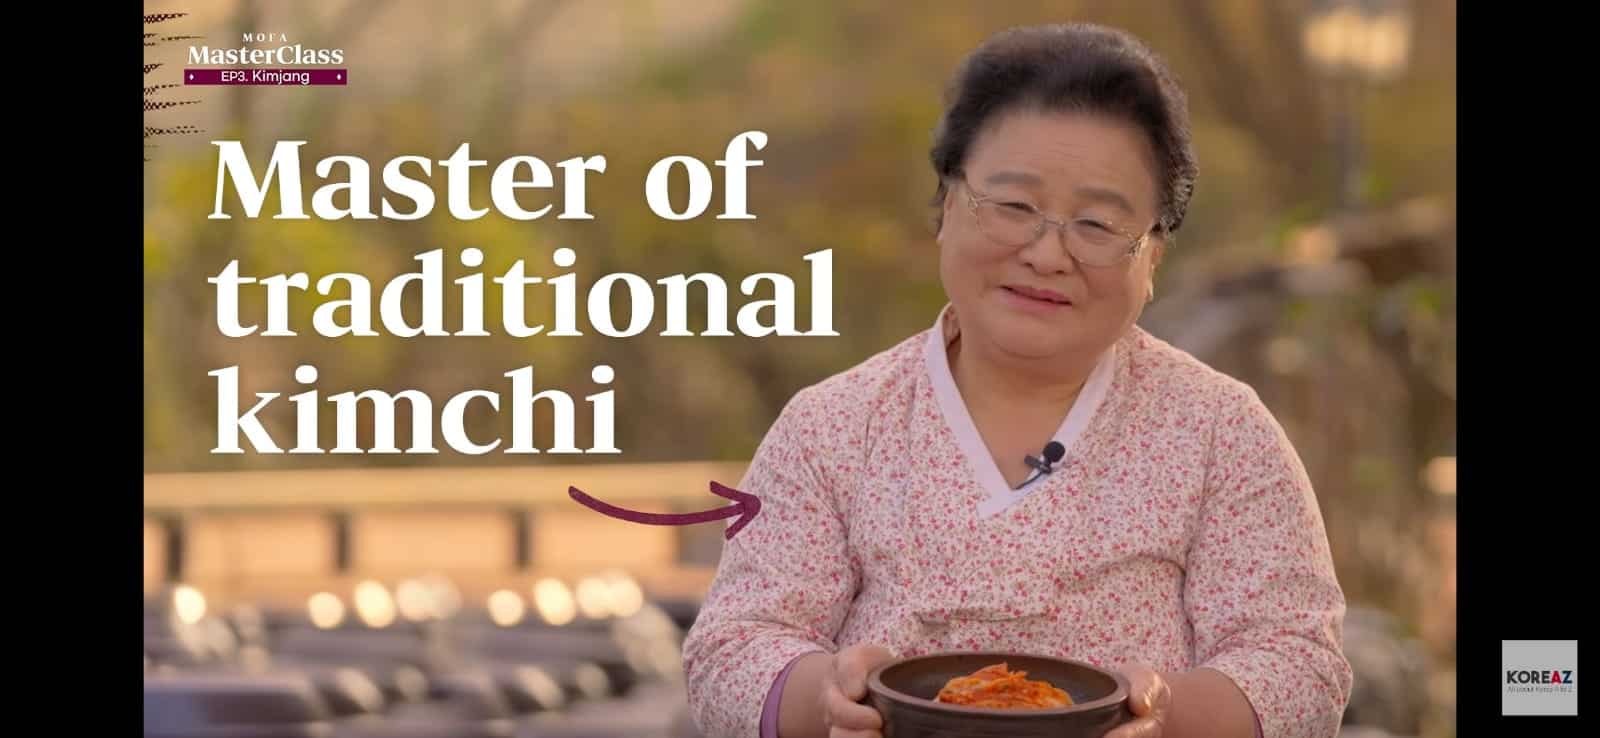 Aprende a preparar kimchi con esta súper Master Class del gobierno de Corea